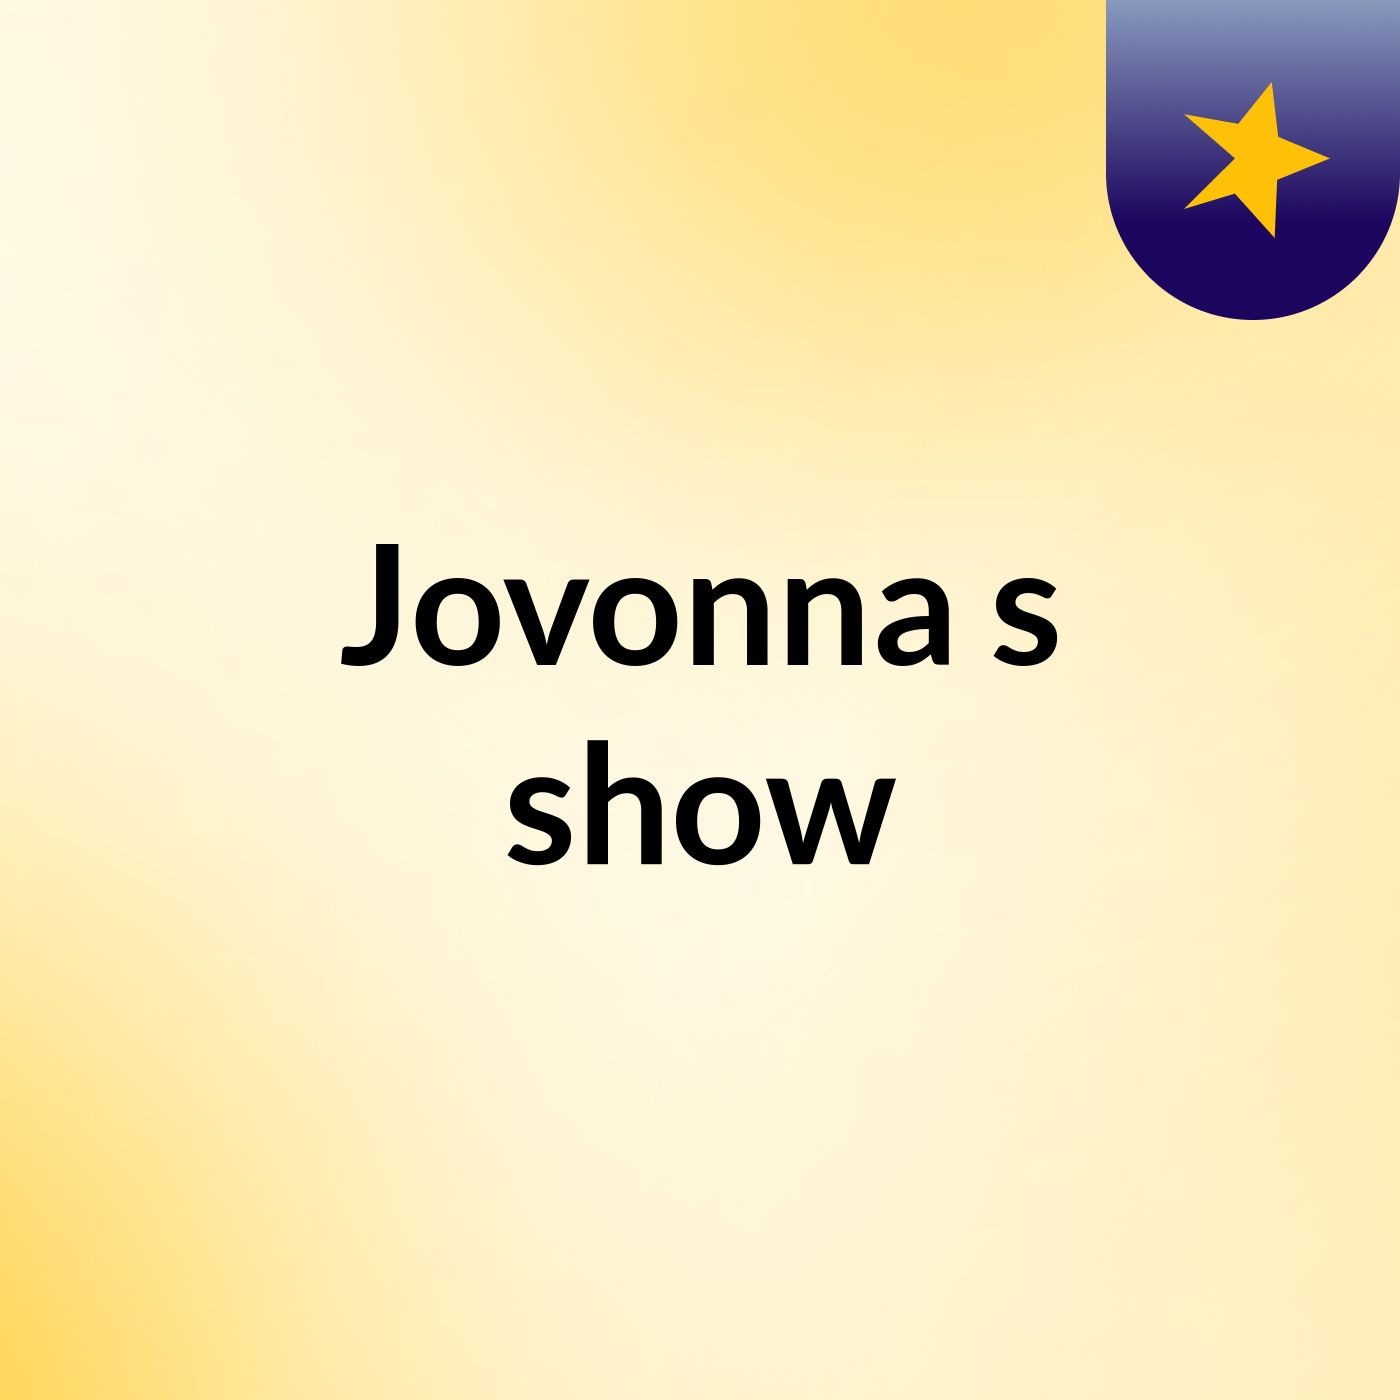 Jovonna's show